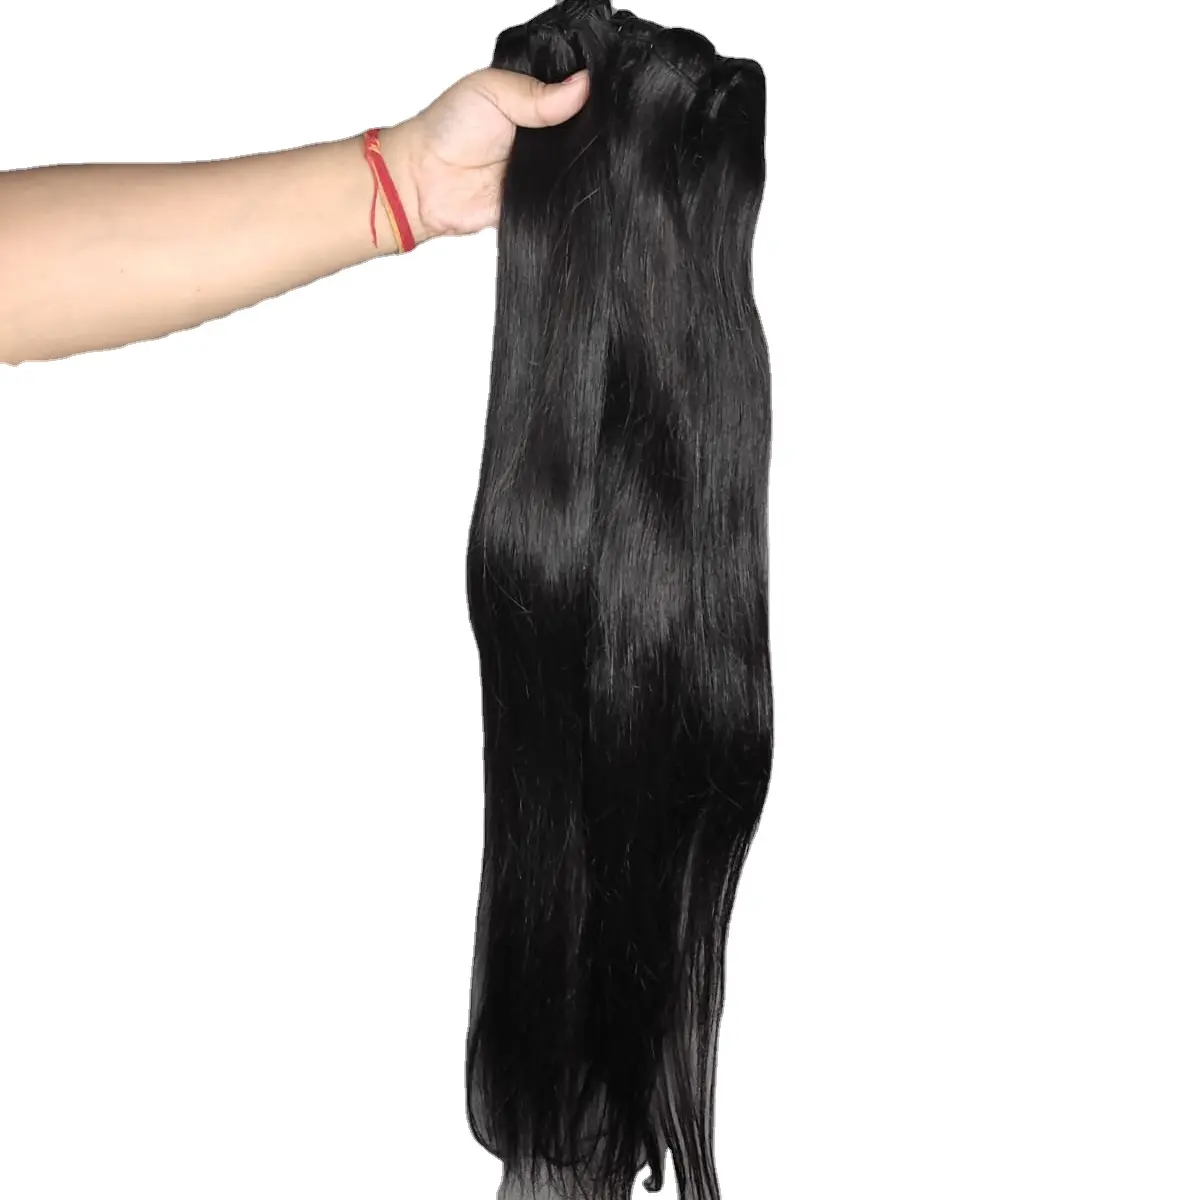 Bestseller Übersee Indien Großhandel Rohe unverarbeitete Jungfrau Brasilia nische Indische Bündel Haar verkäufer